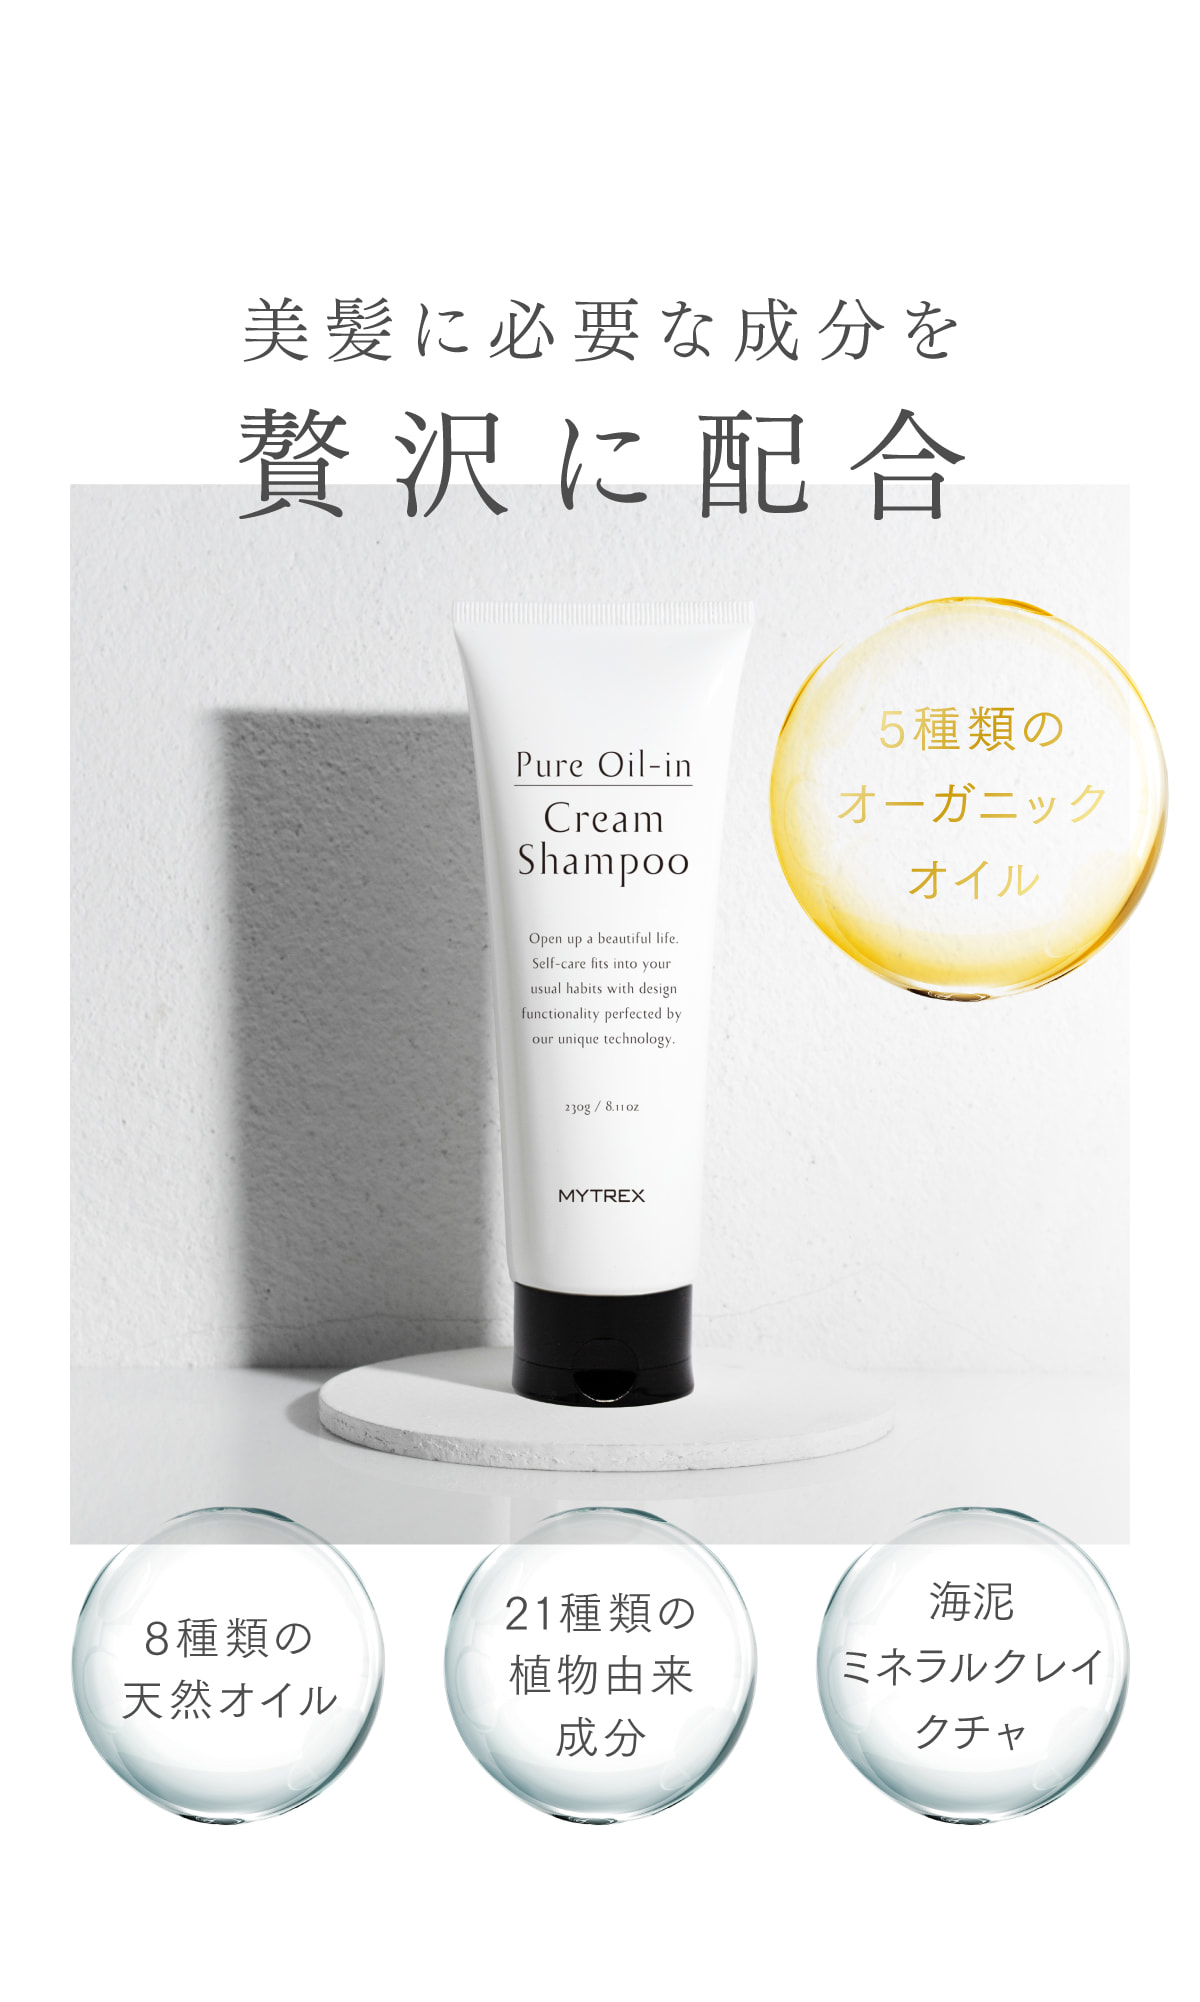 MYTREX Pure Oil-in Cream Shampoo マイトレックス ピュア オイルイン クリーム シャンプー